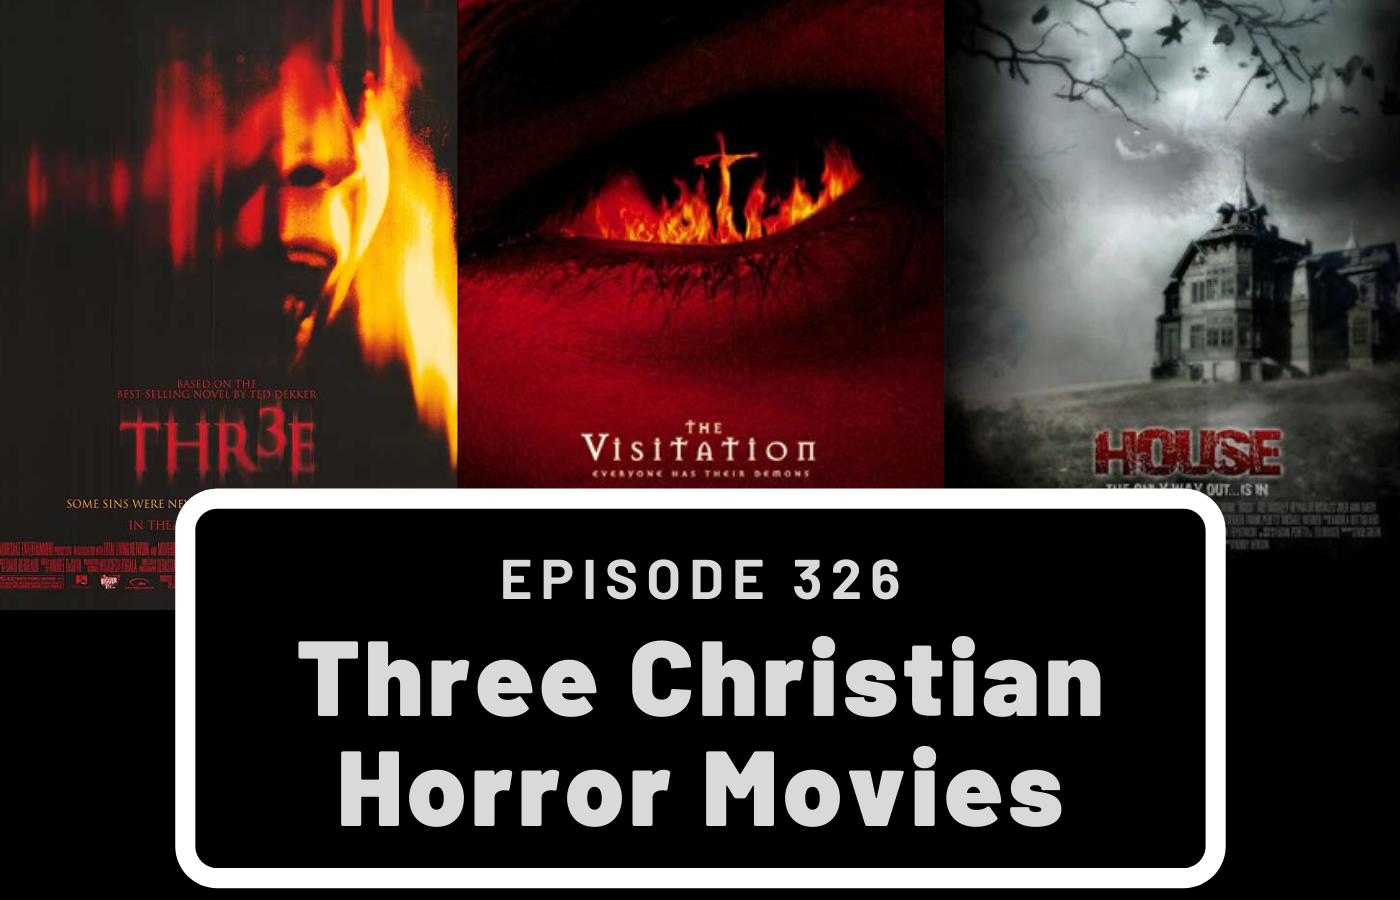 Watching THE VISITATION, THR3E, and HOUSE: 3 Christian Horror Movies with John Harju – SA326